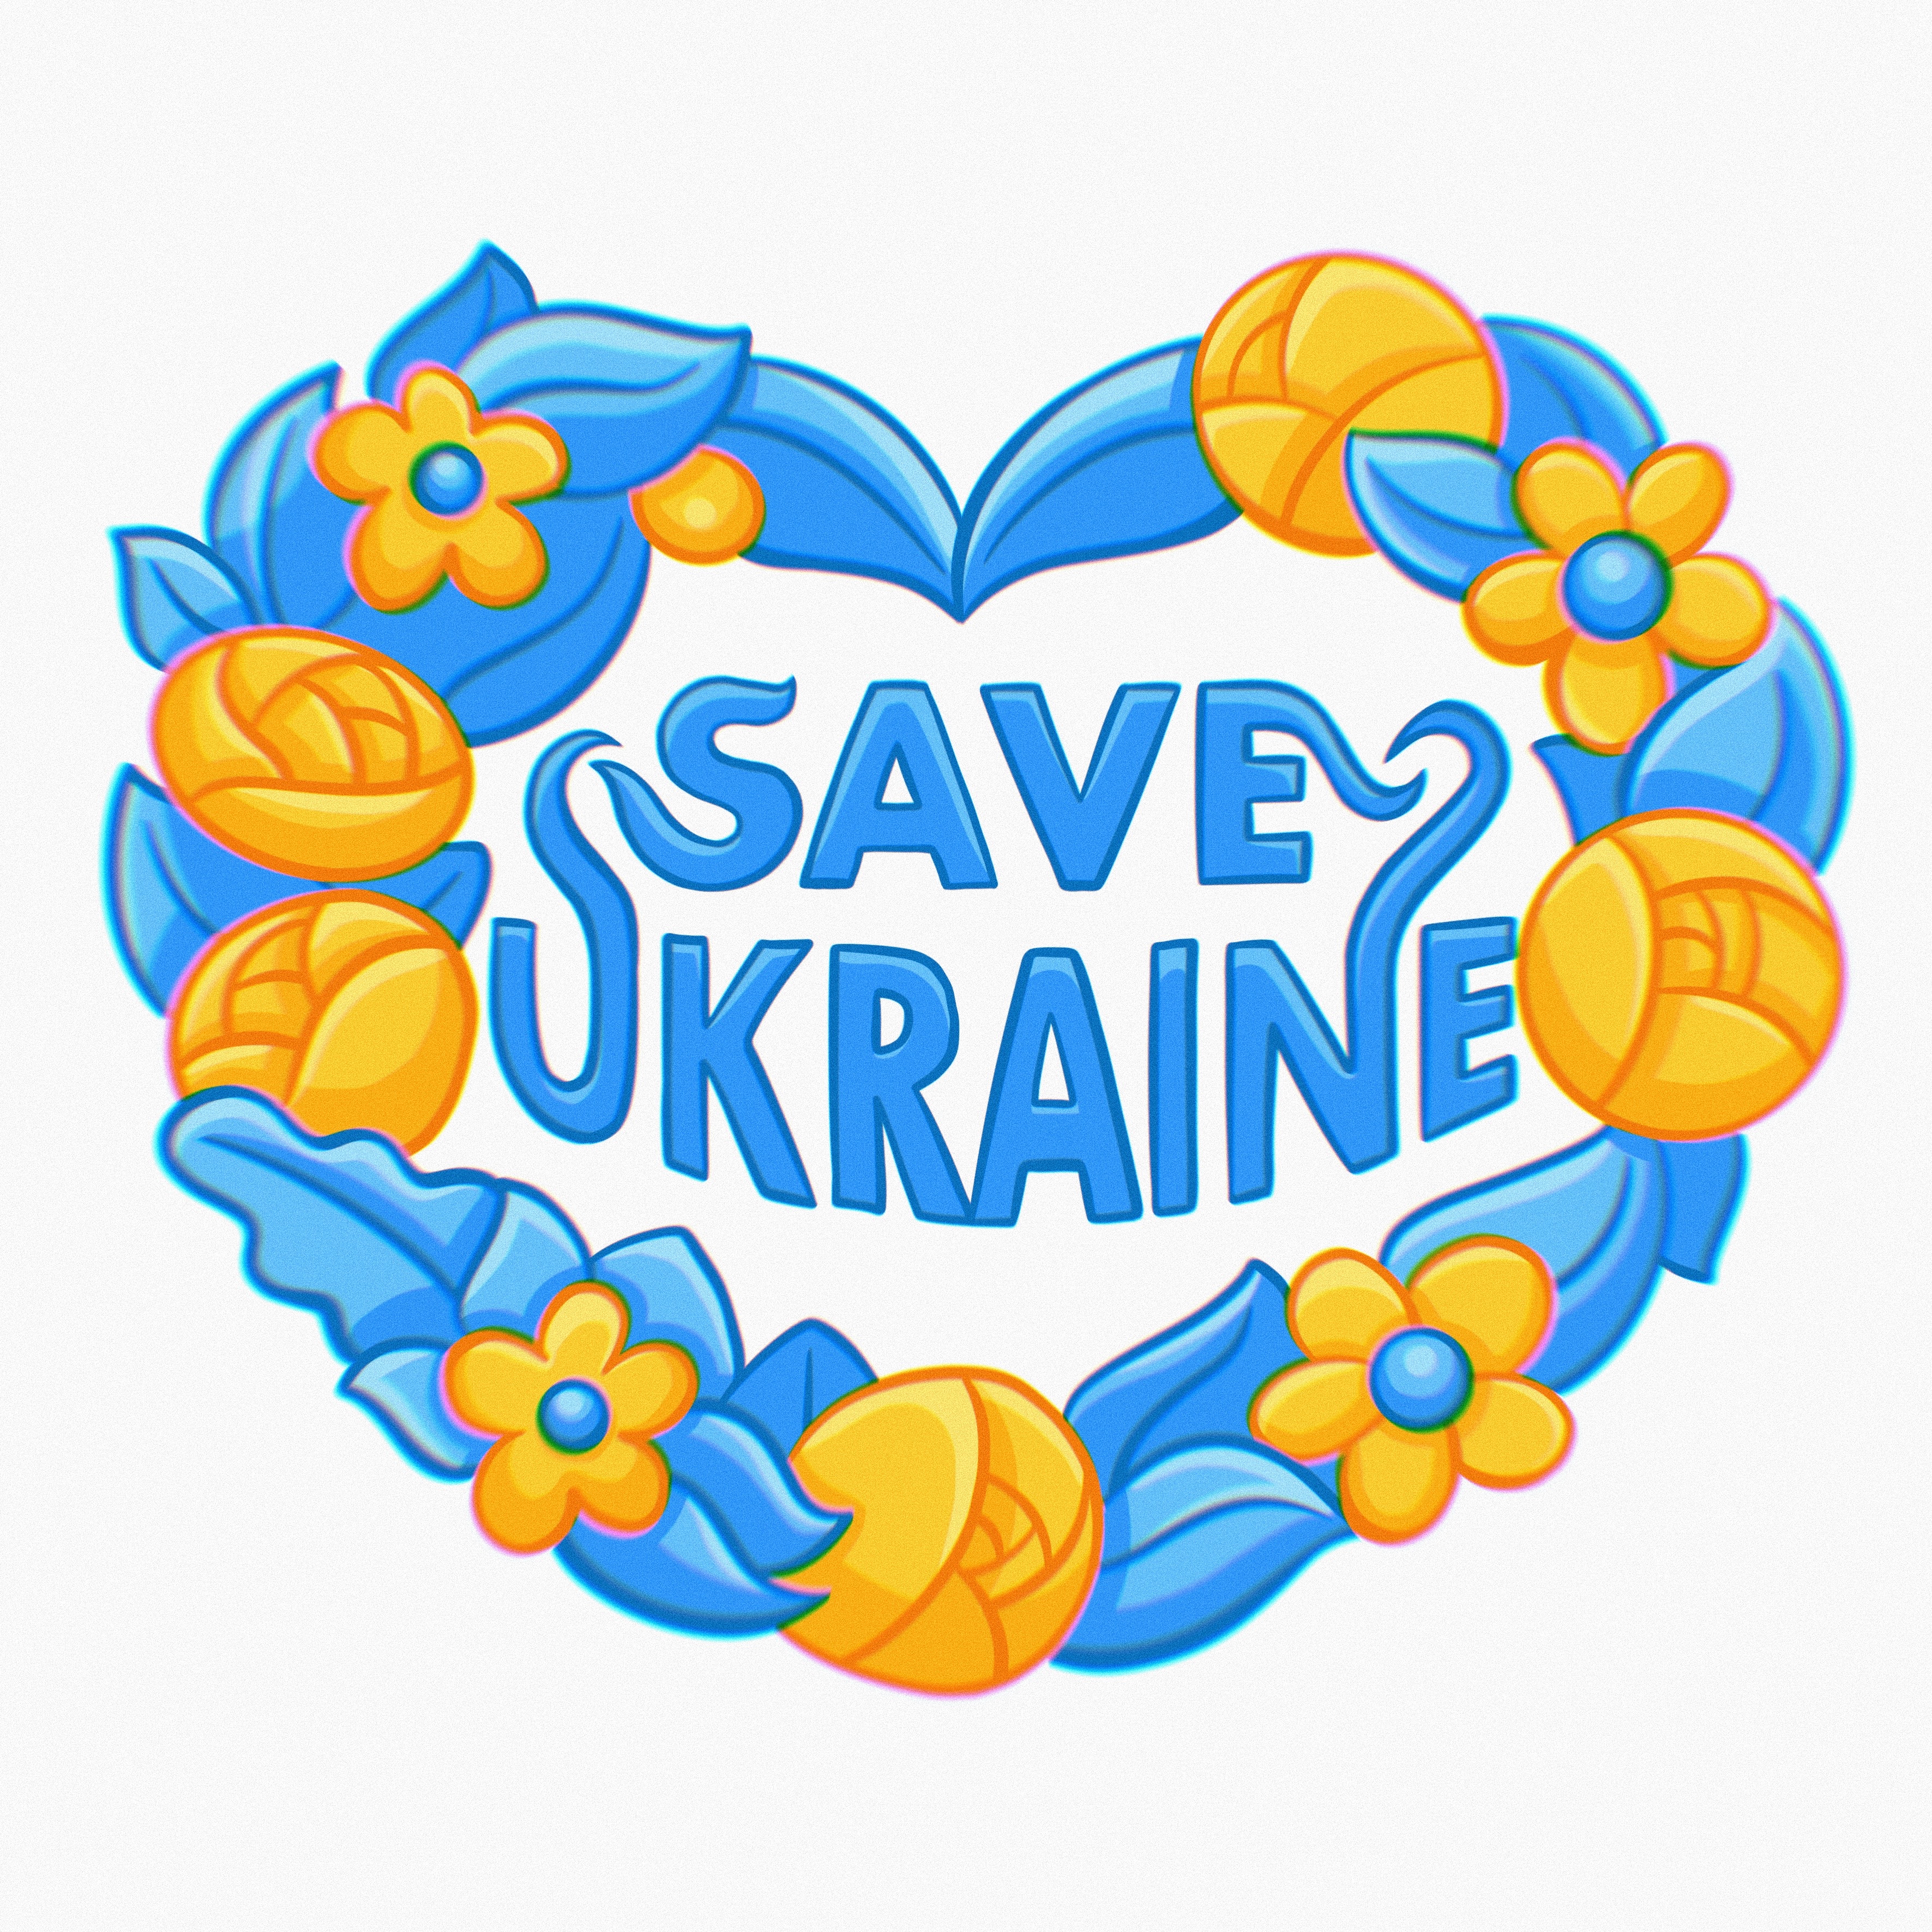 "Save Ukraine" #019: The Wreath